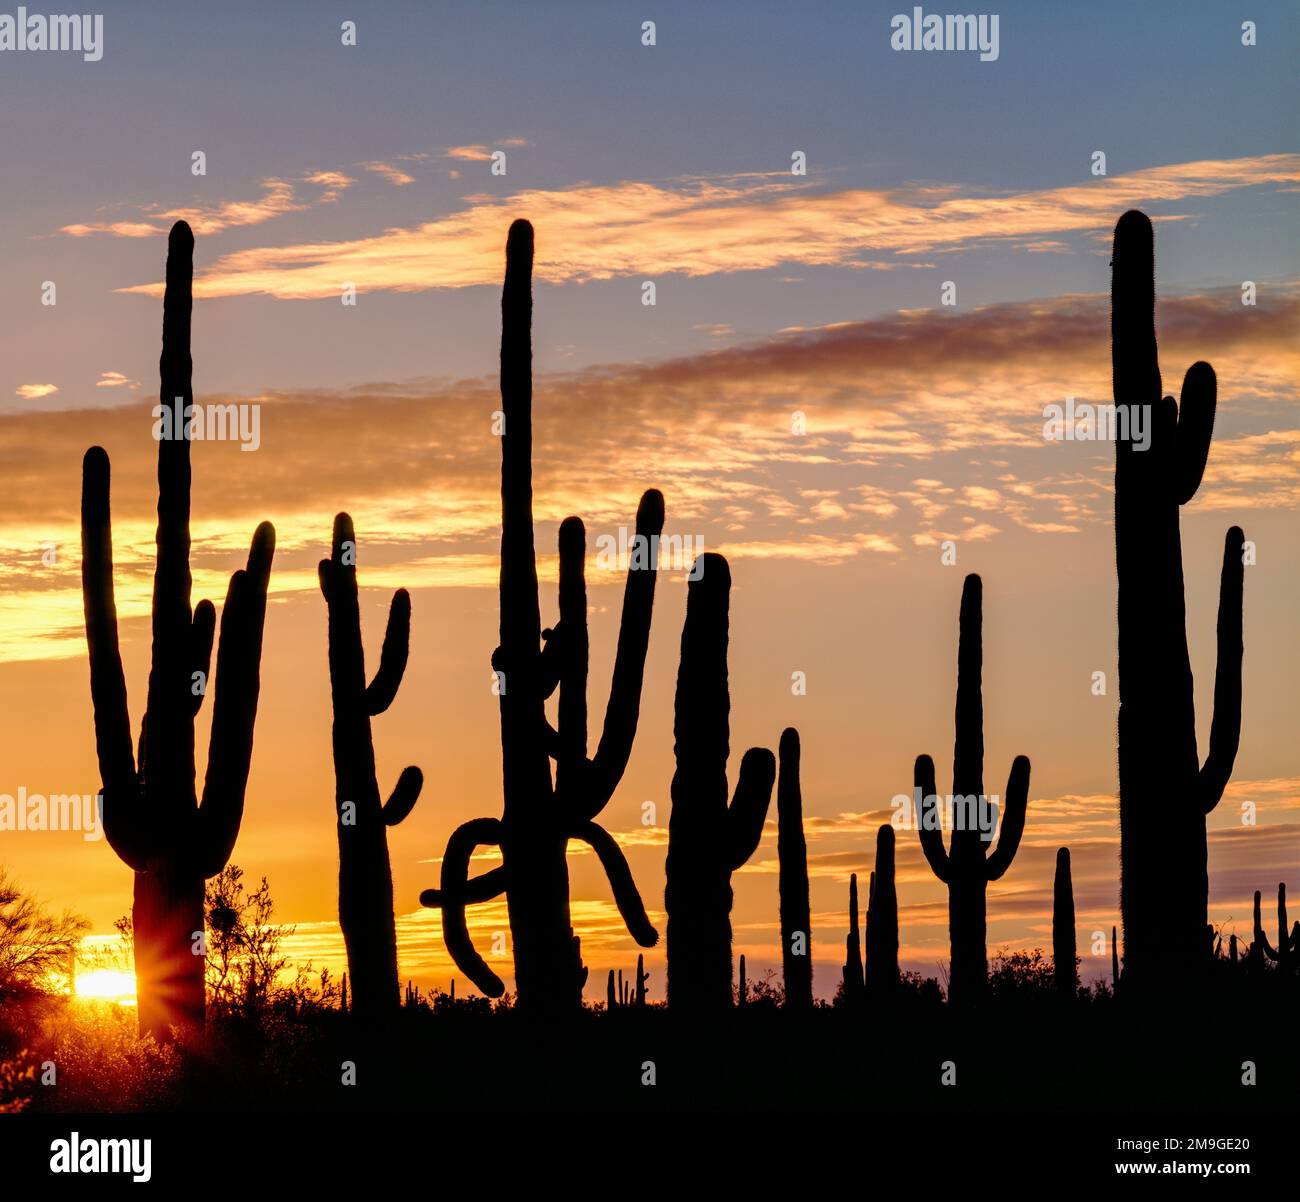 Silhouetted saguaro cacti (Carnegiea gigantea) in desert at sunset, Sonoran Desert National Monument, Arizona, USA Stock Photo